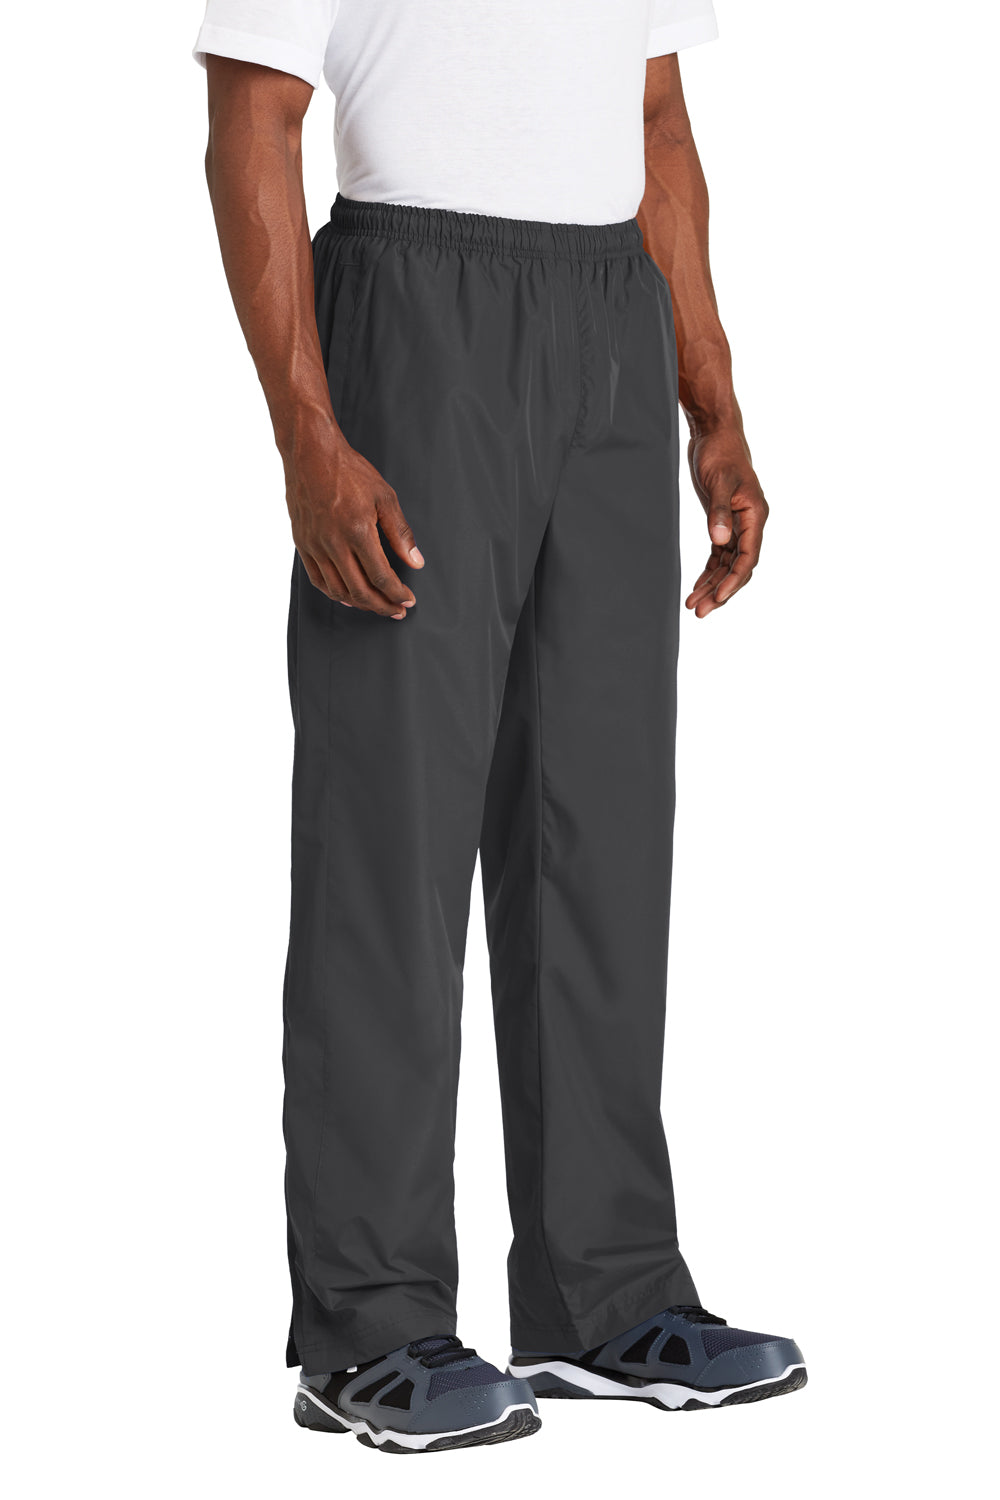 Sport-Tek PST74 Wind Pants w/ Pockets Graphite Grey 3Q